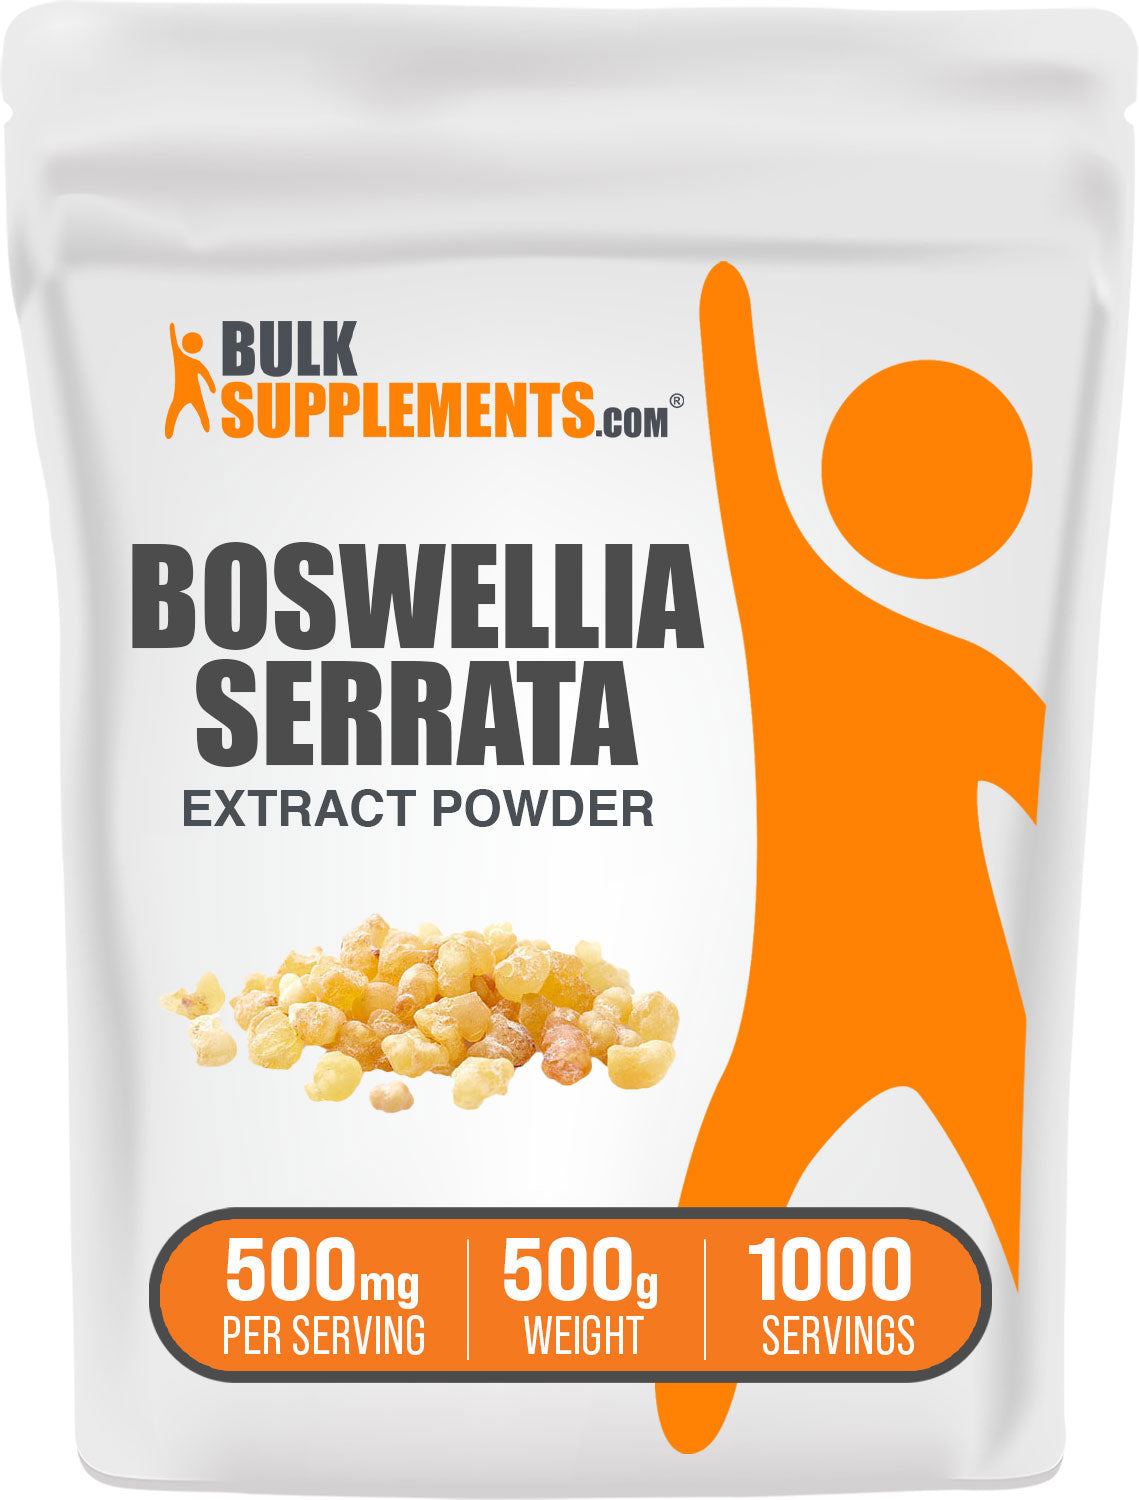 BulkSupplements.com Boswellia Serrata Extract Powder 500g bag